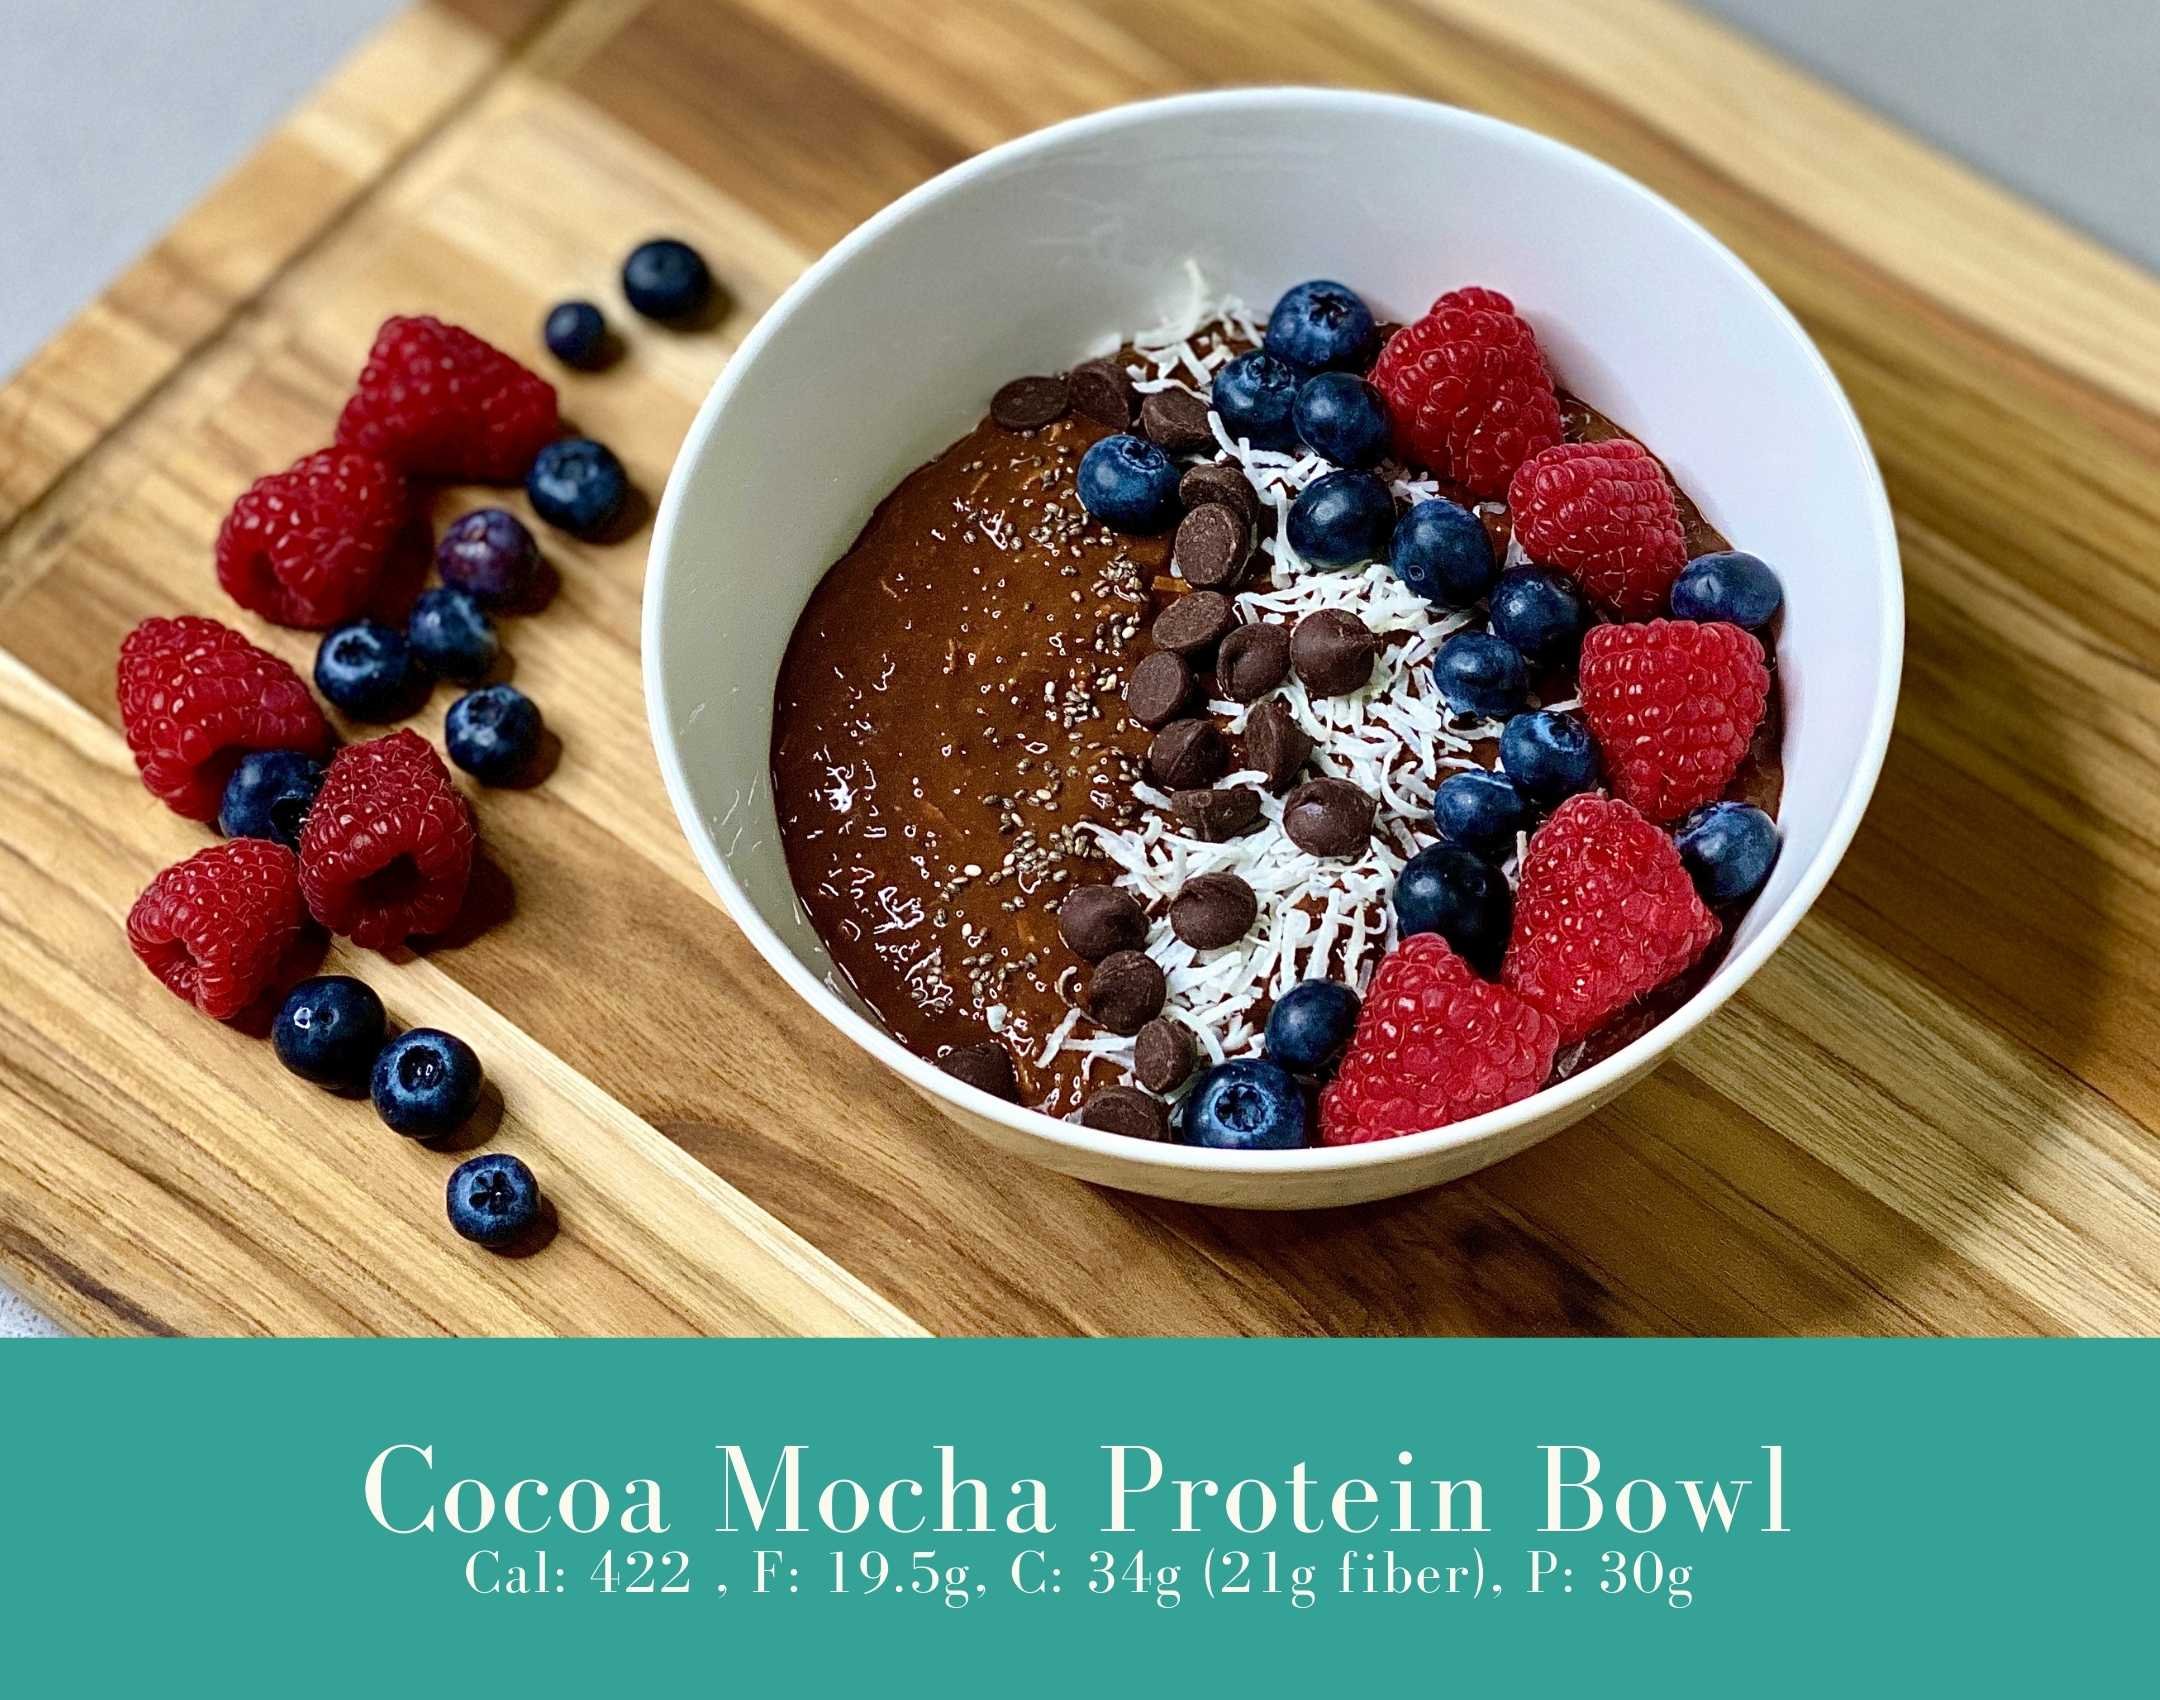 Cocoa mocha Protein Bowl.jpg